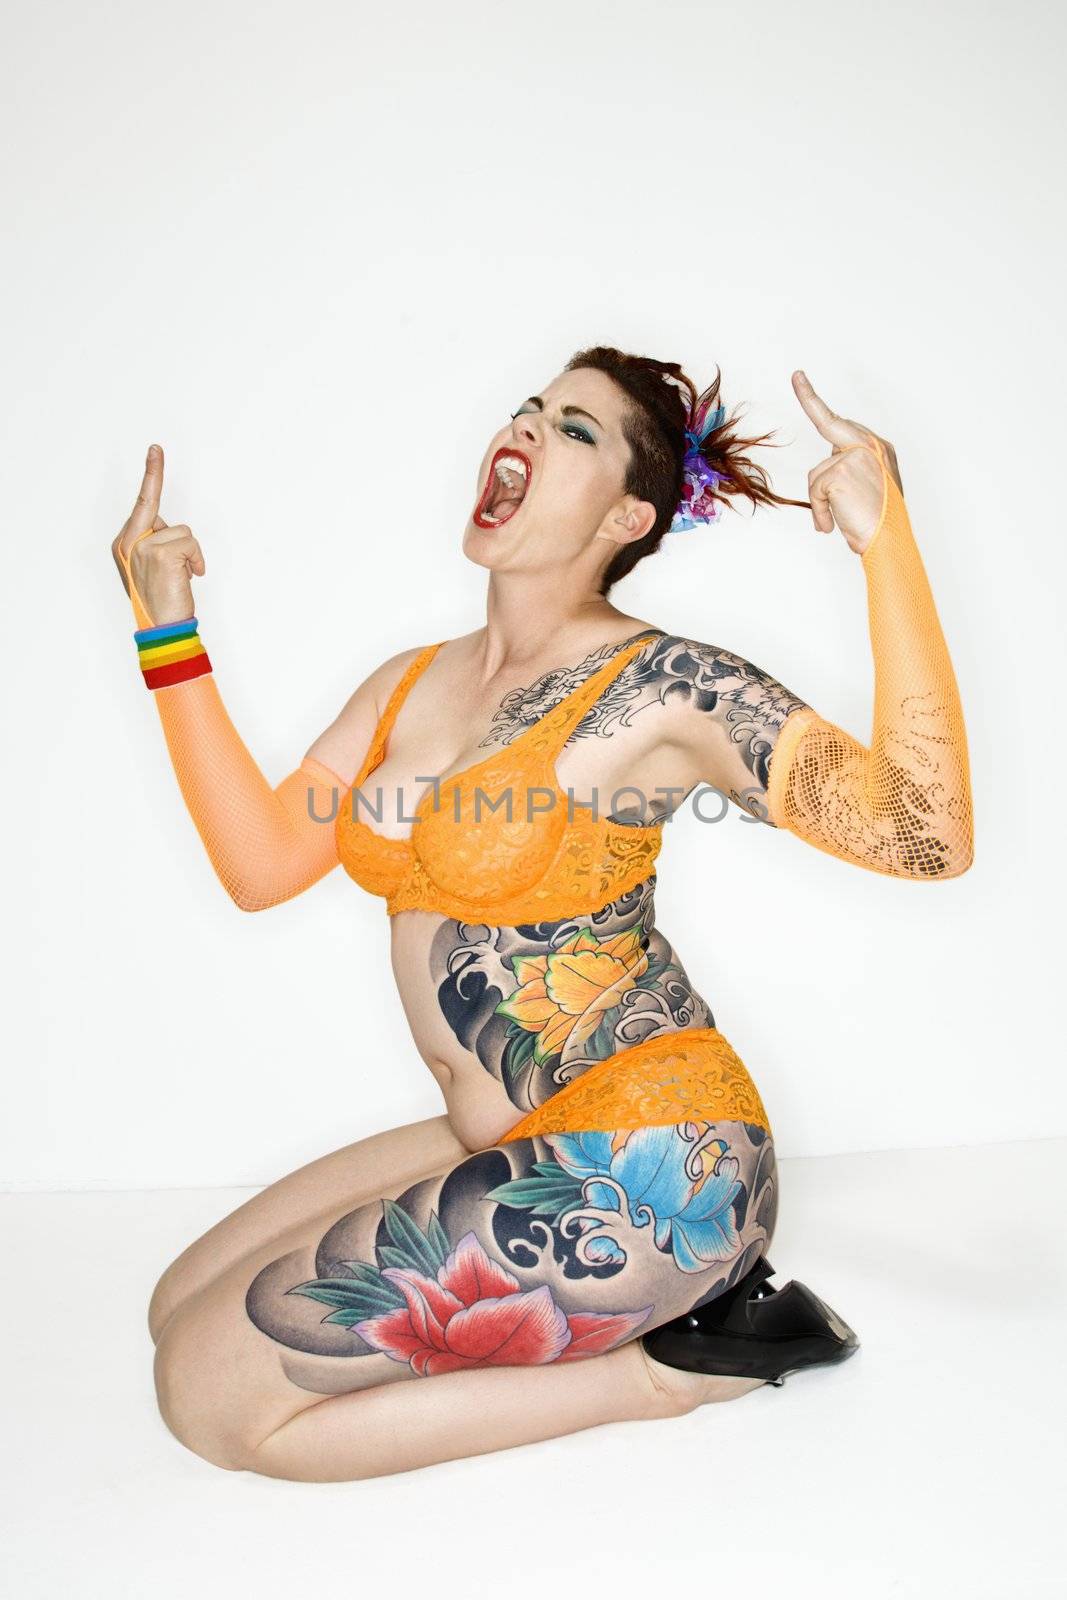 Angry tattooed woman by iofoto